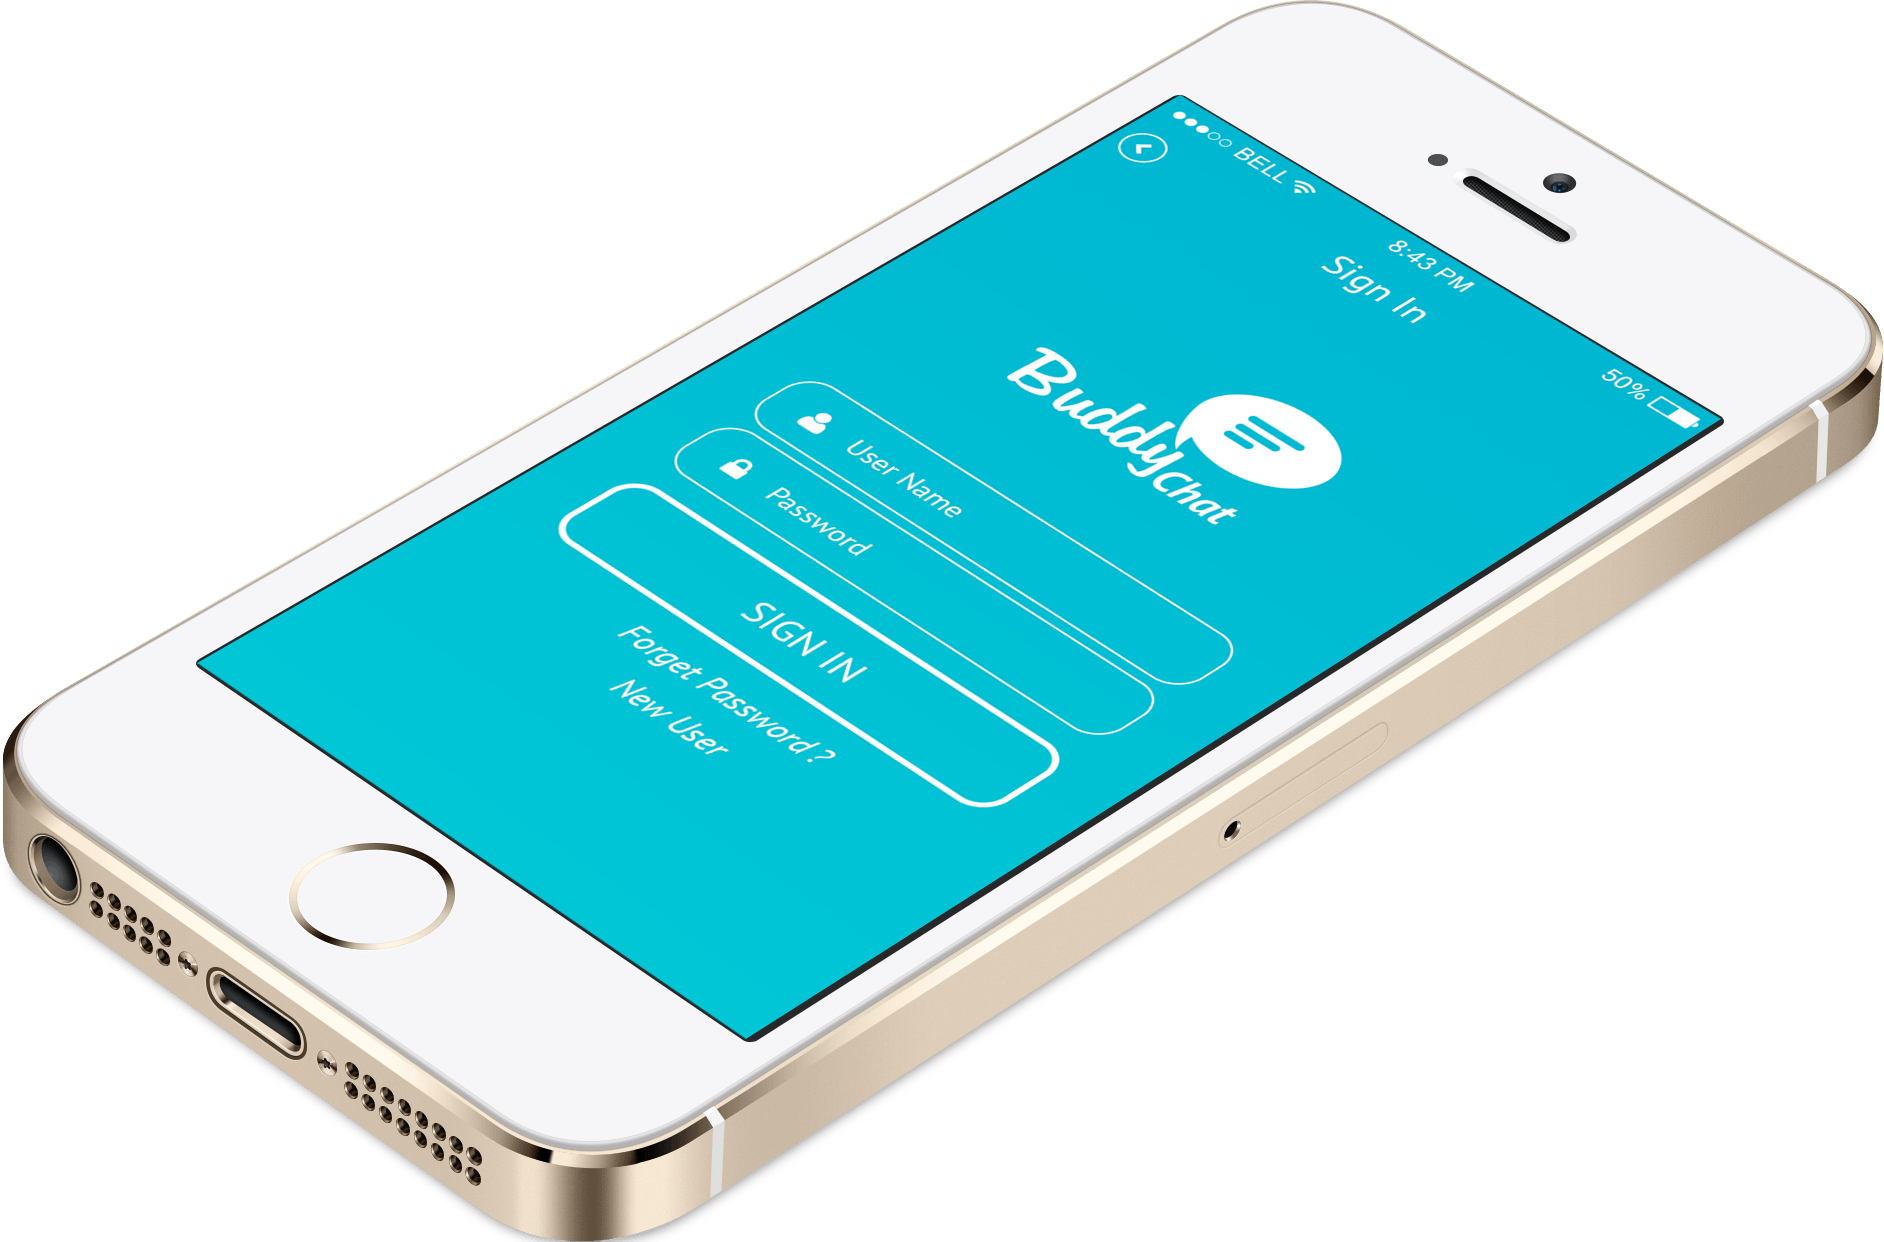 Buddychat App Design Buddychat App Design - Mobile Phone (1884x1242)